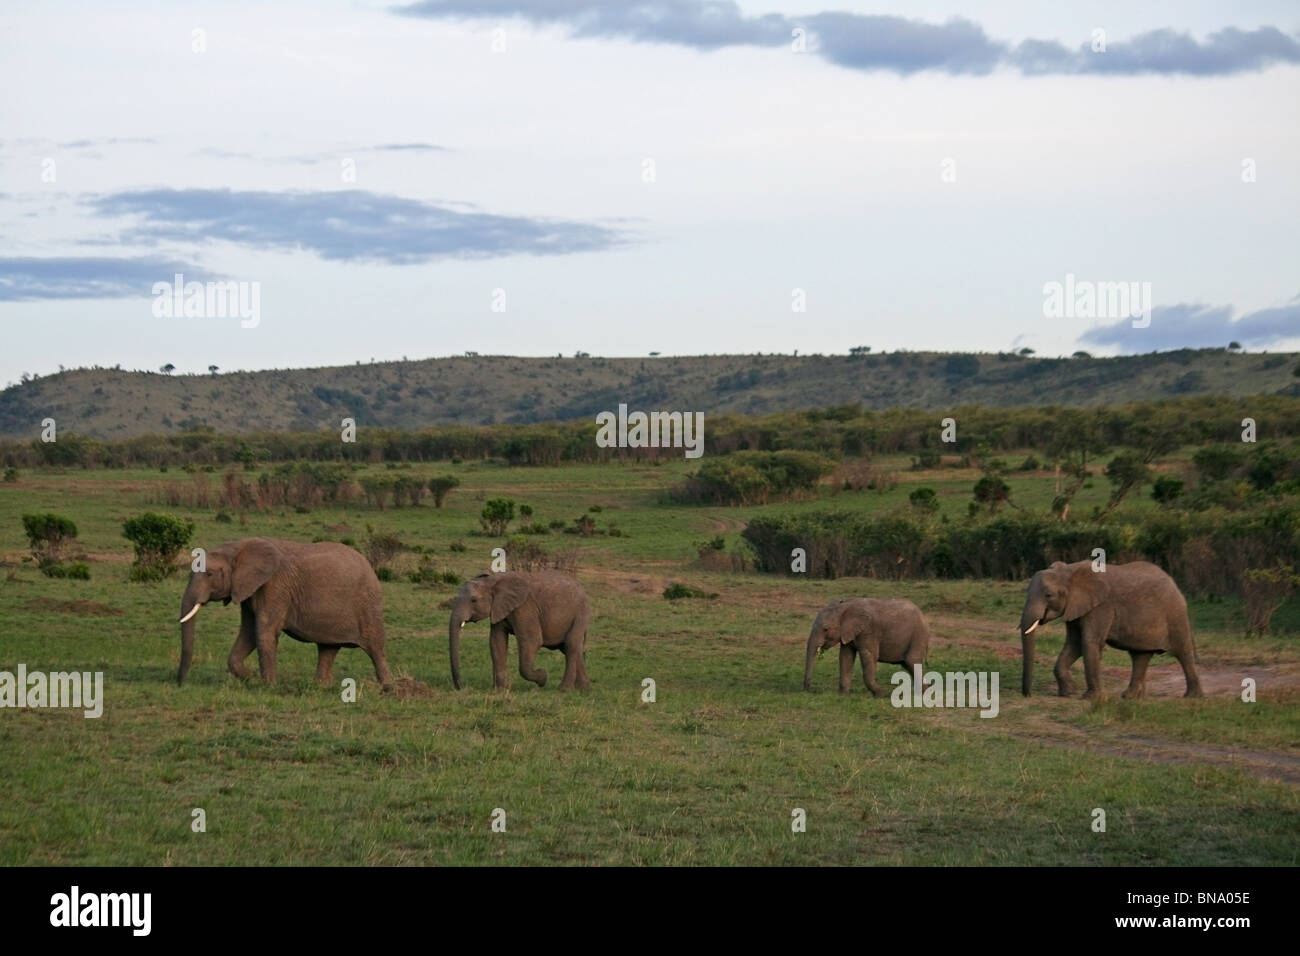 A family of Elephants walking across the grasslands of Masai Mara National Reserve, Kenya East Africa Stock Photo